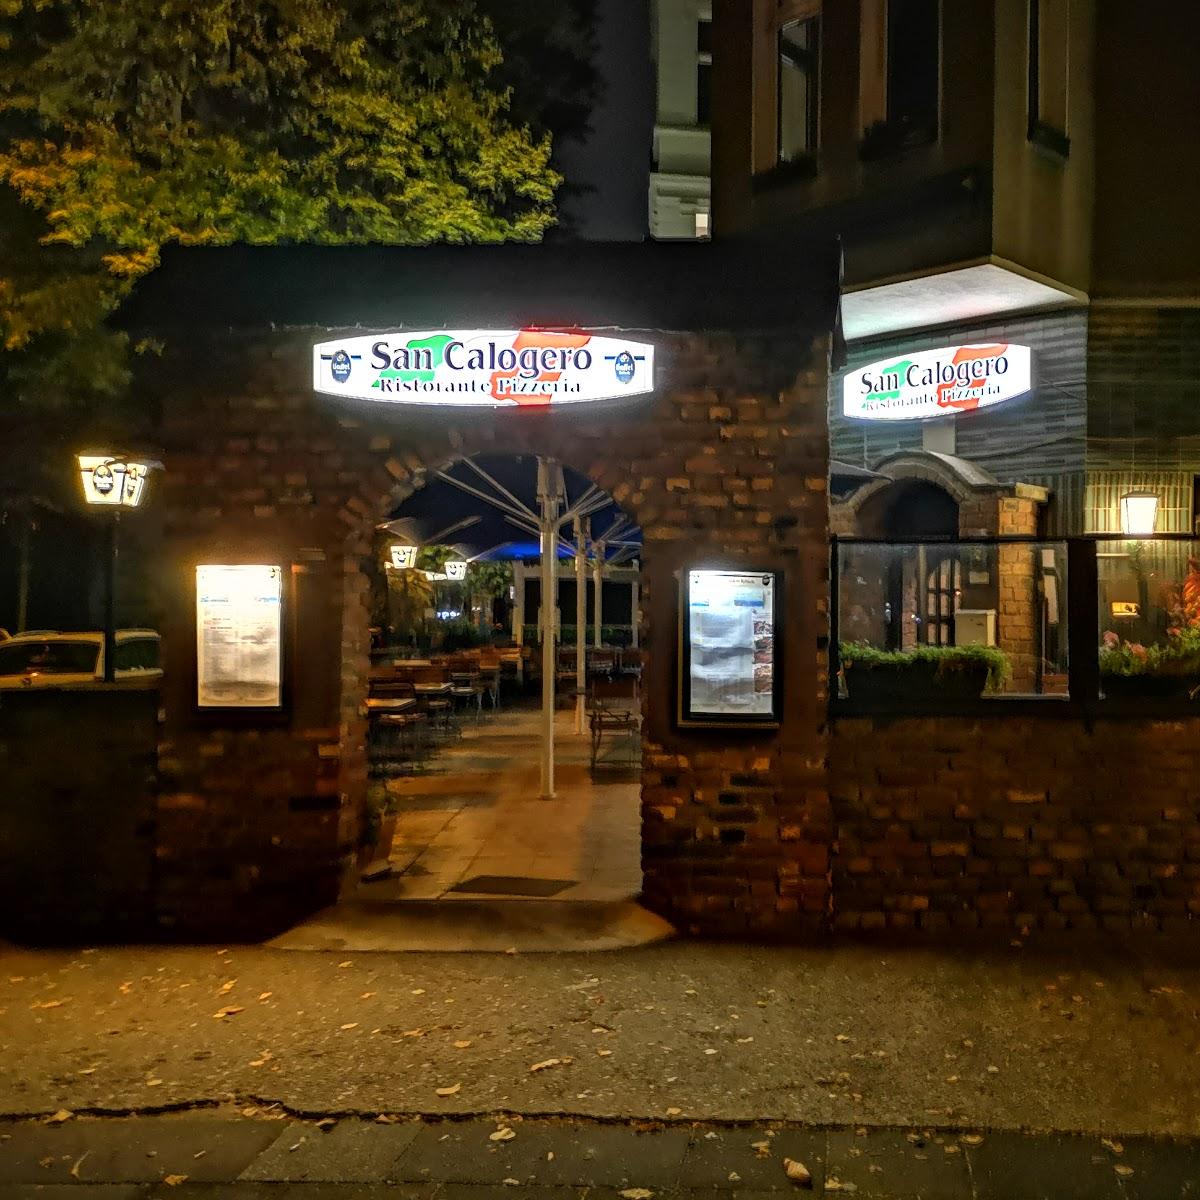 Restaurant "San Calogero" in Köln